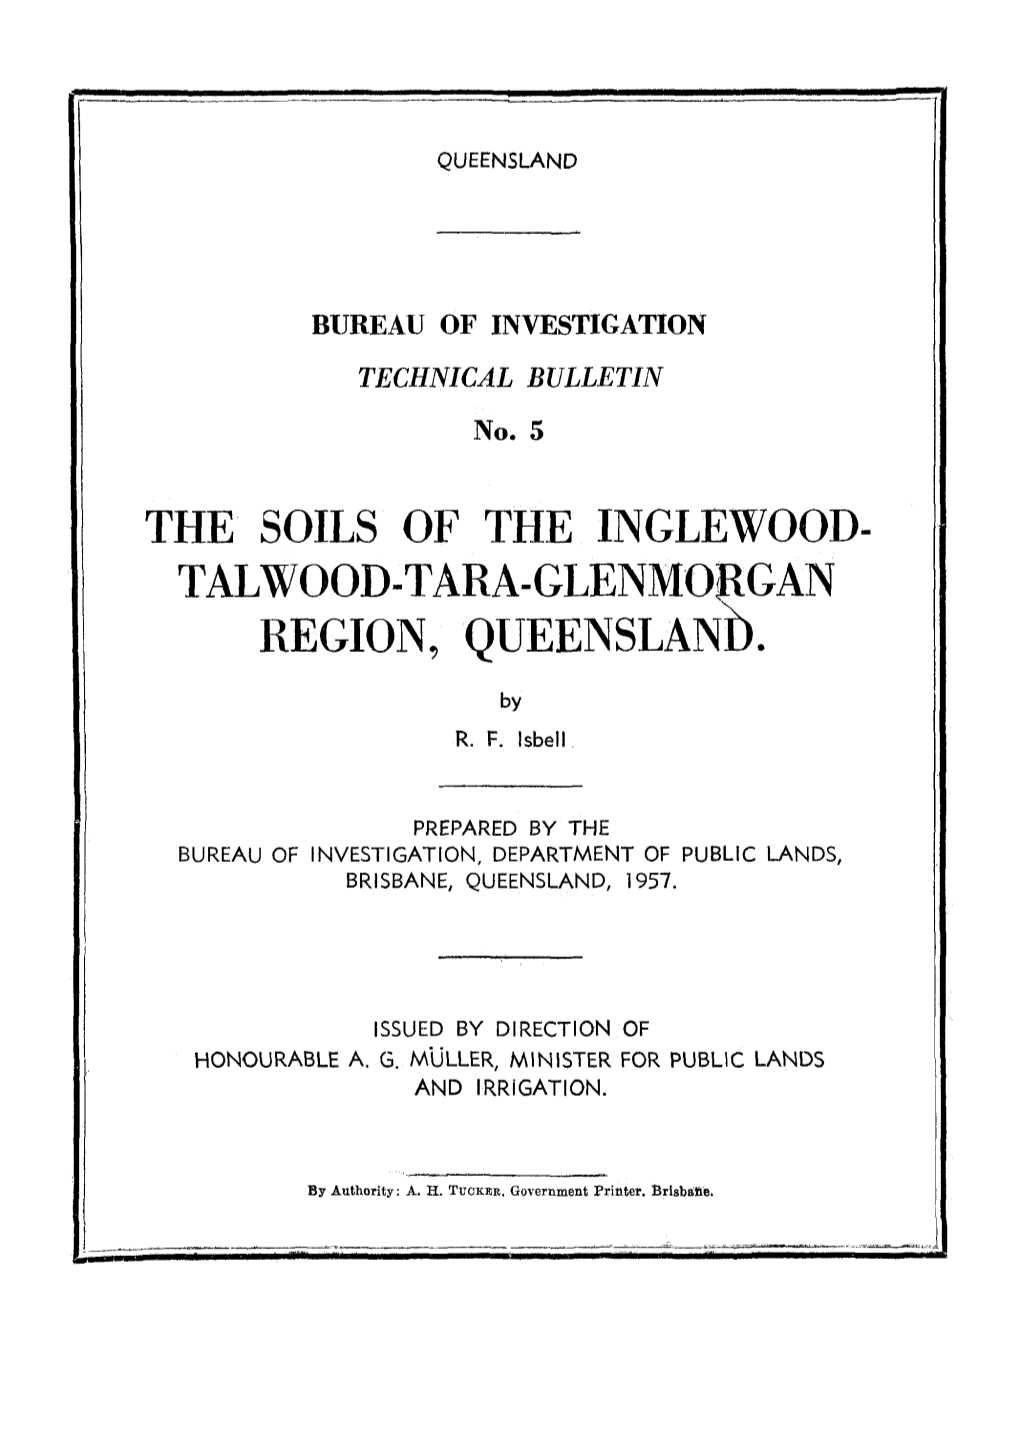 Soils of the Inglewood-Tara-Talwood